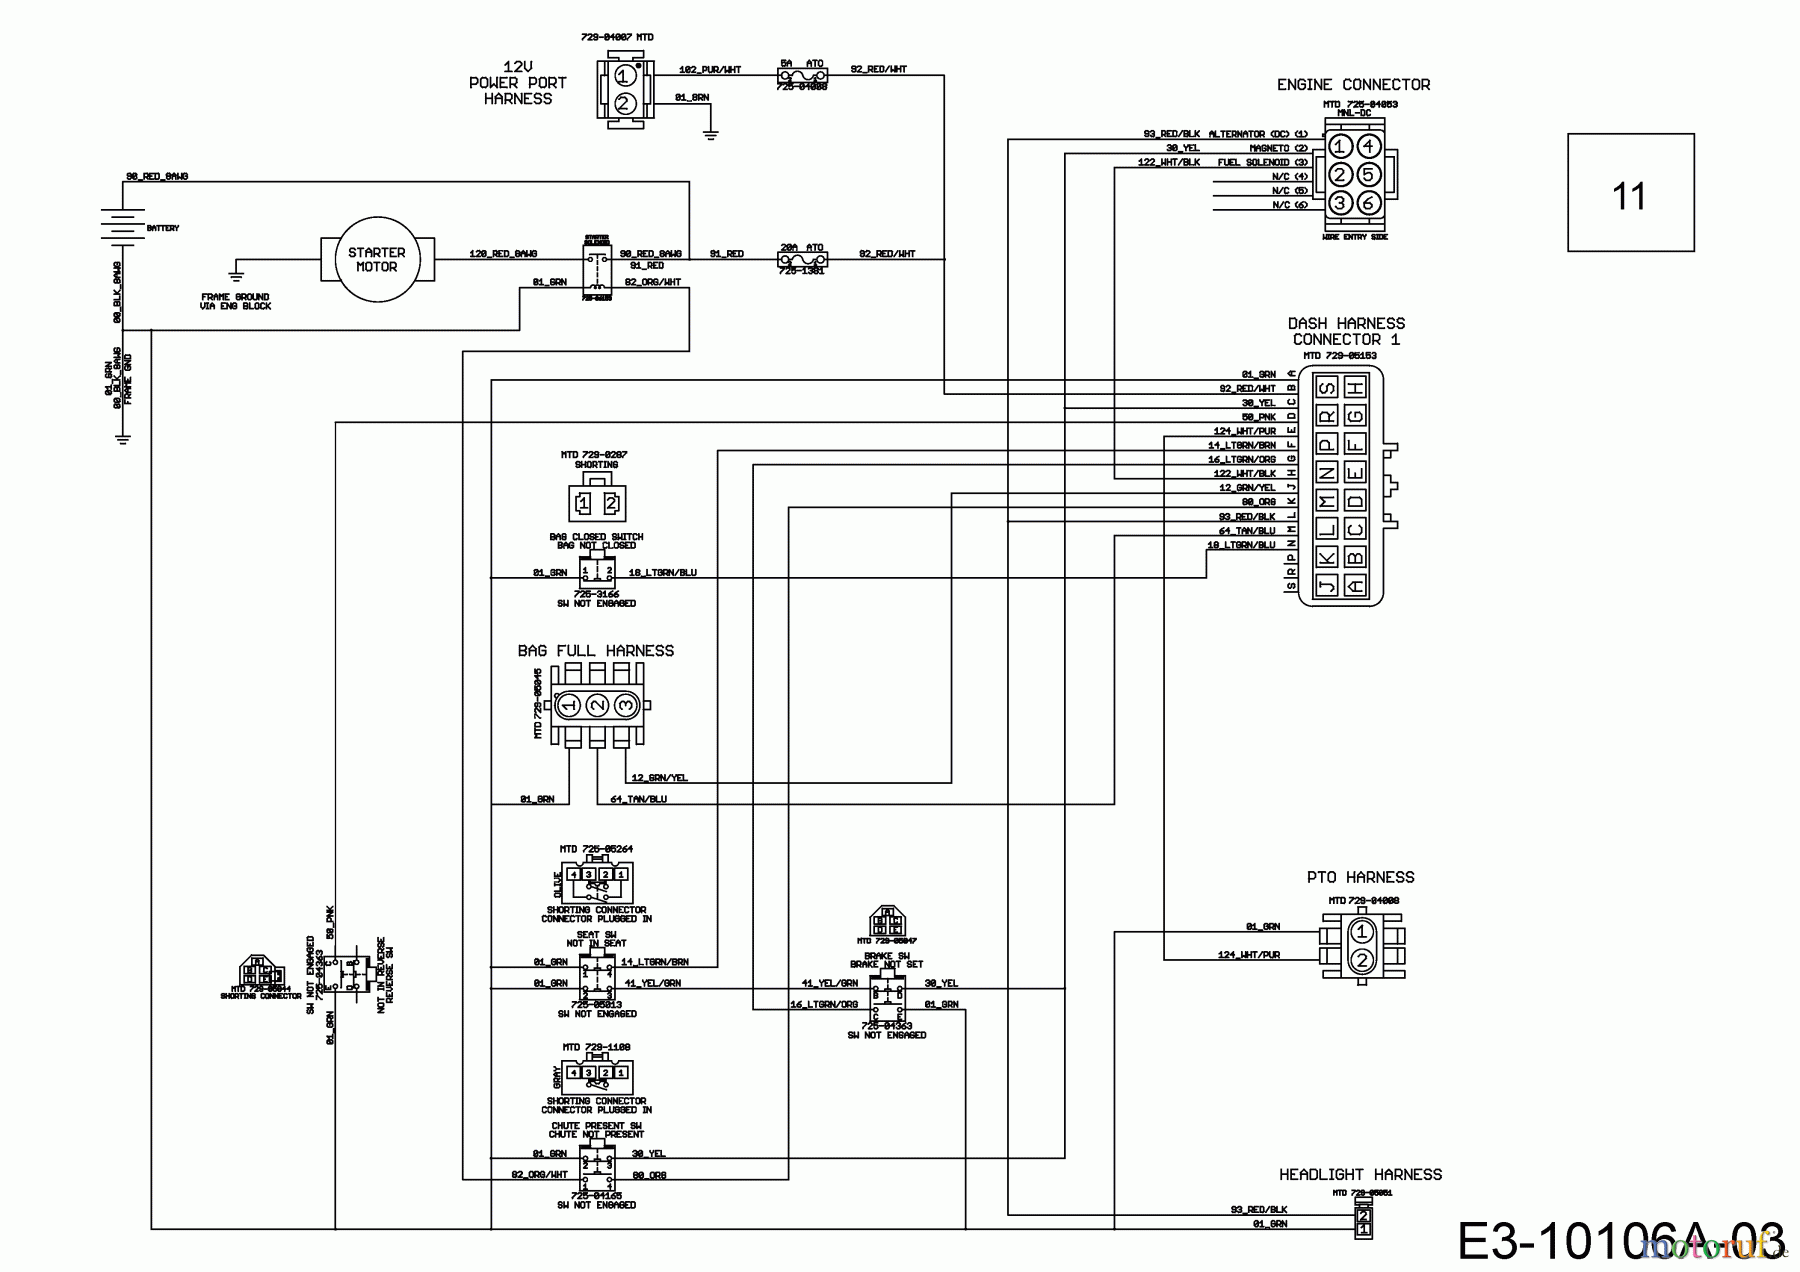  Wolf-Garten Lawn tractors 95.165 H 13ADA1VB650  (2017) Main wiring diagram